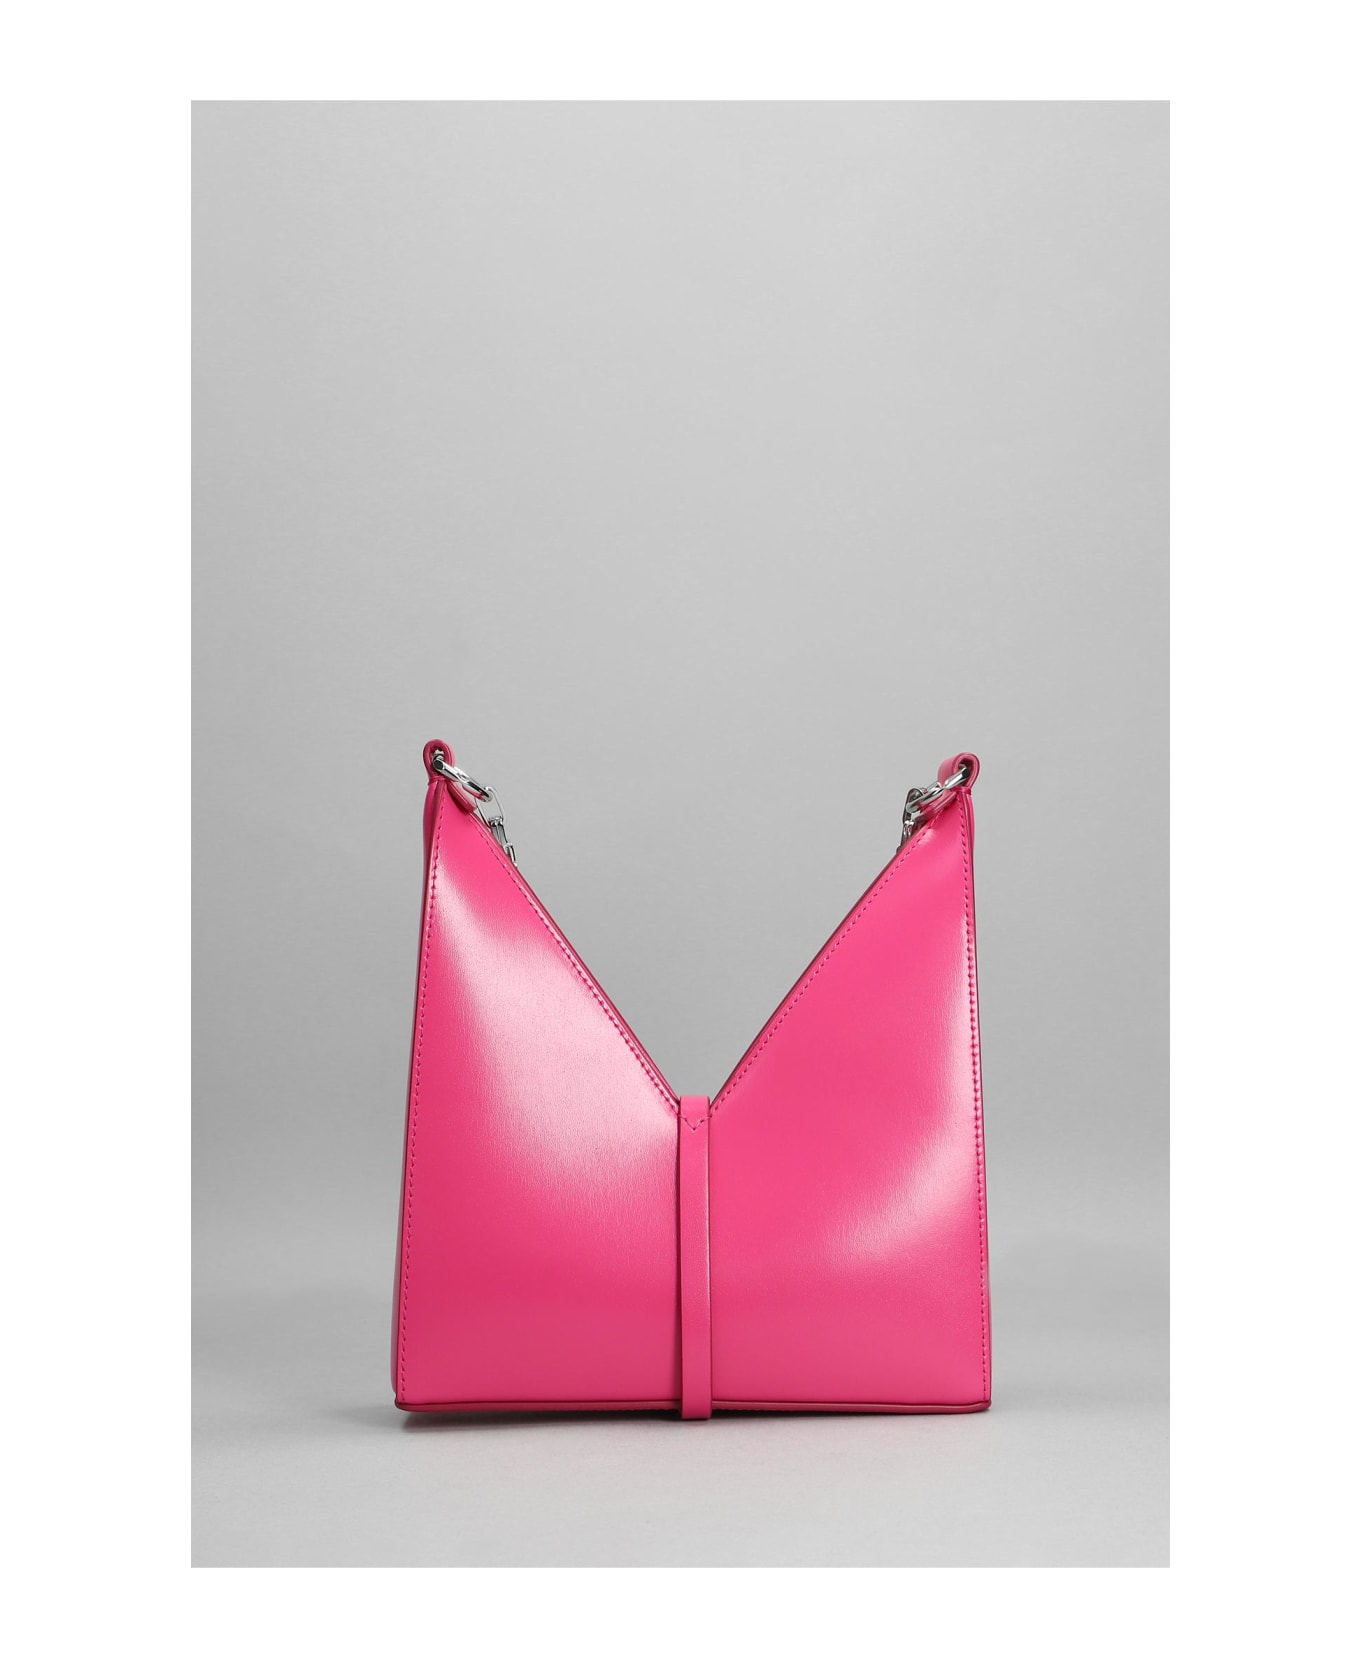 Givenchy Cut Out Shoulder Bag In Rose-pink Leather - rose-pink